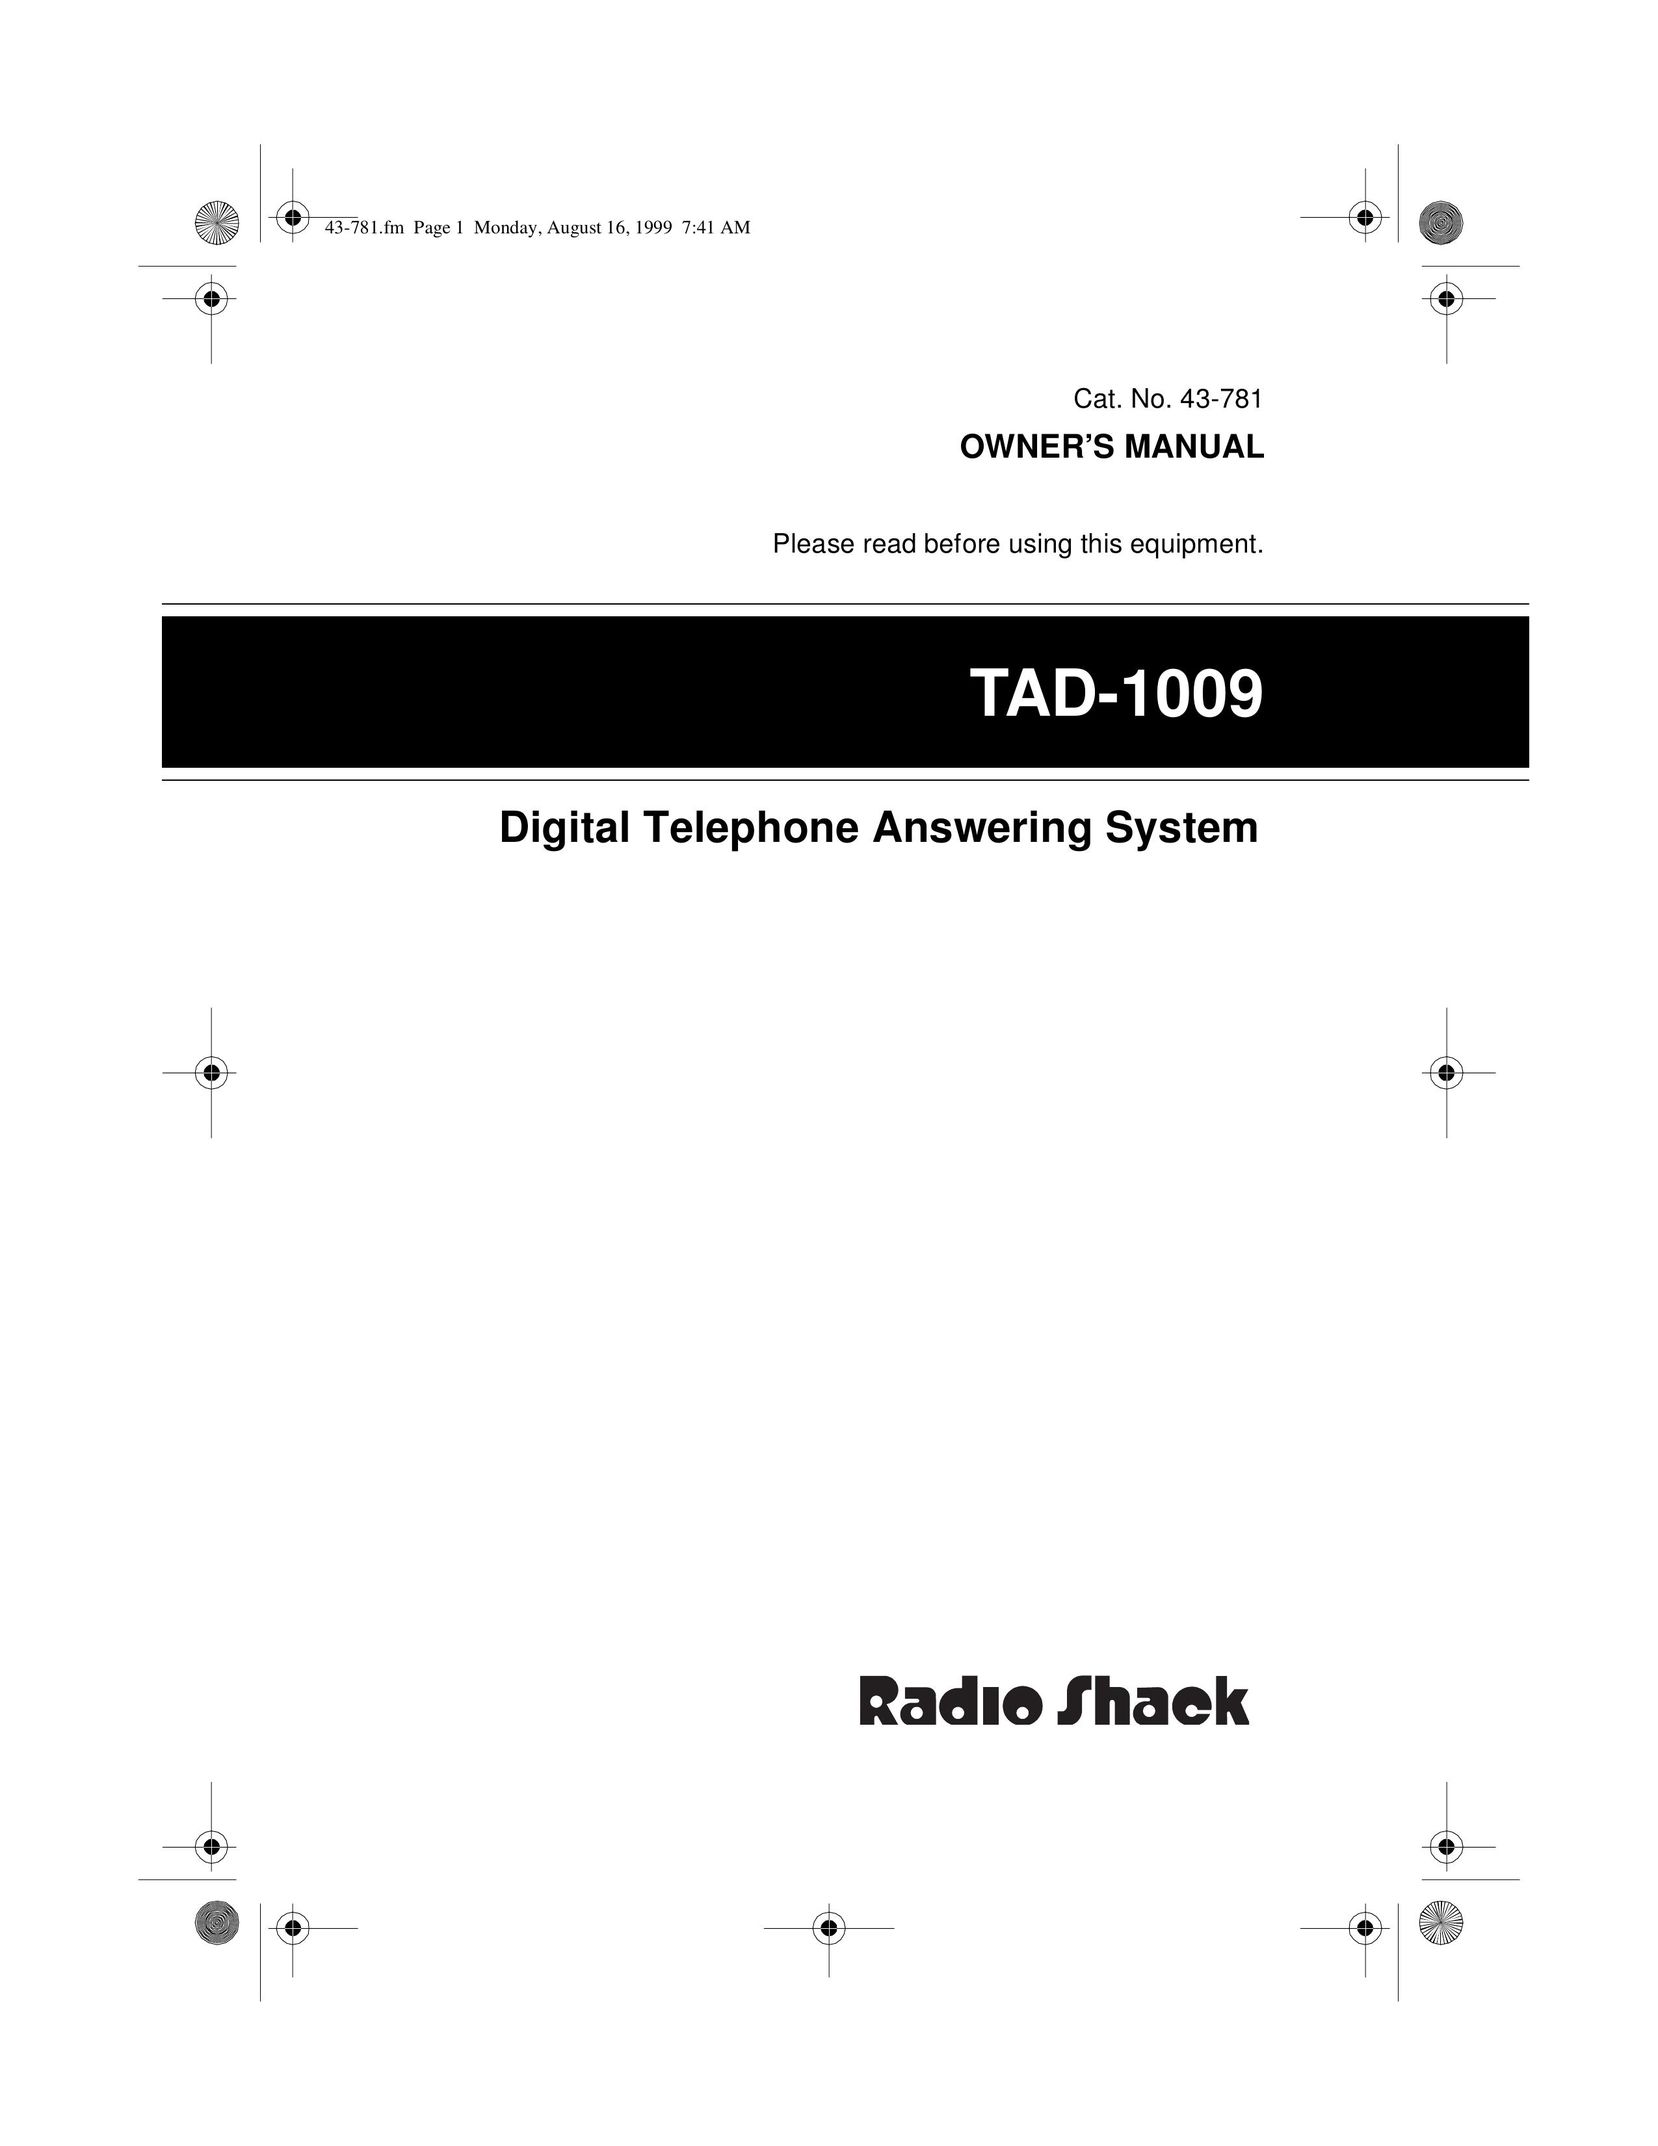 Radio Shack TAD-1009 Answering Machine User Manual